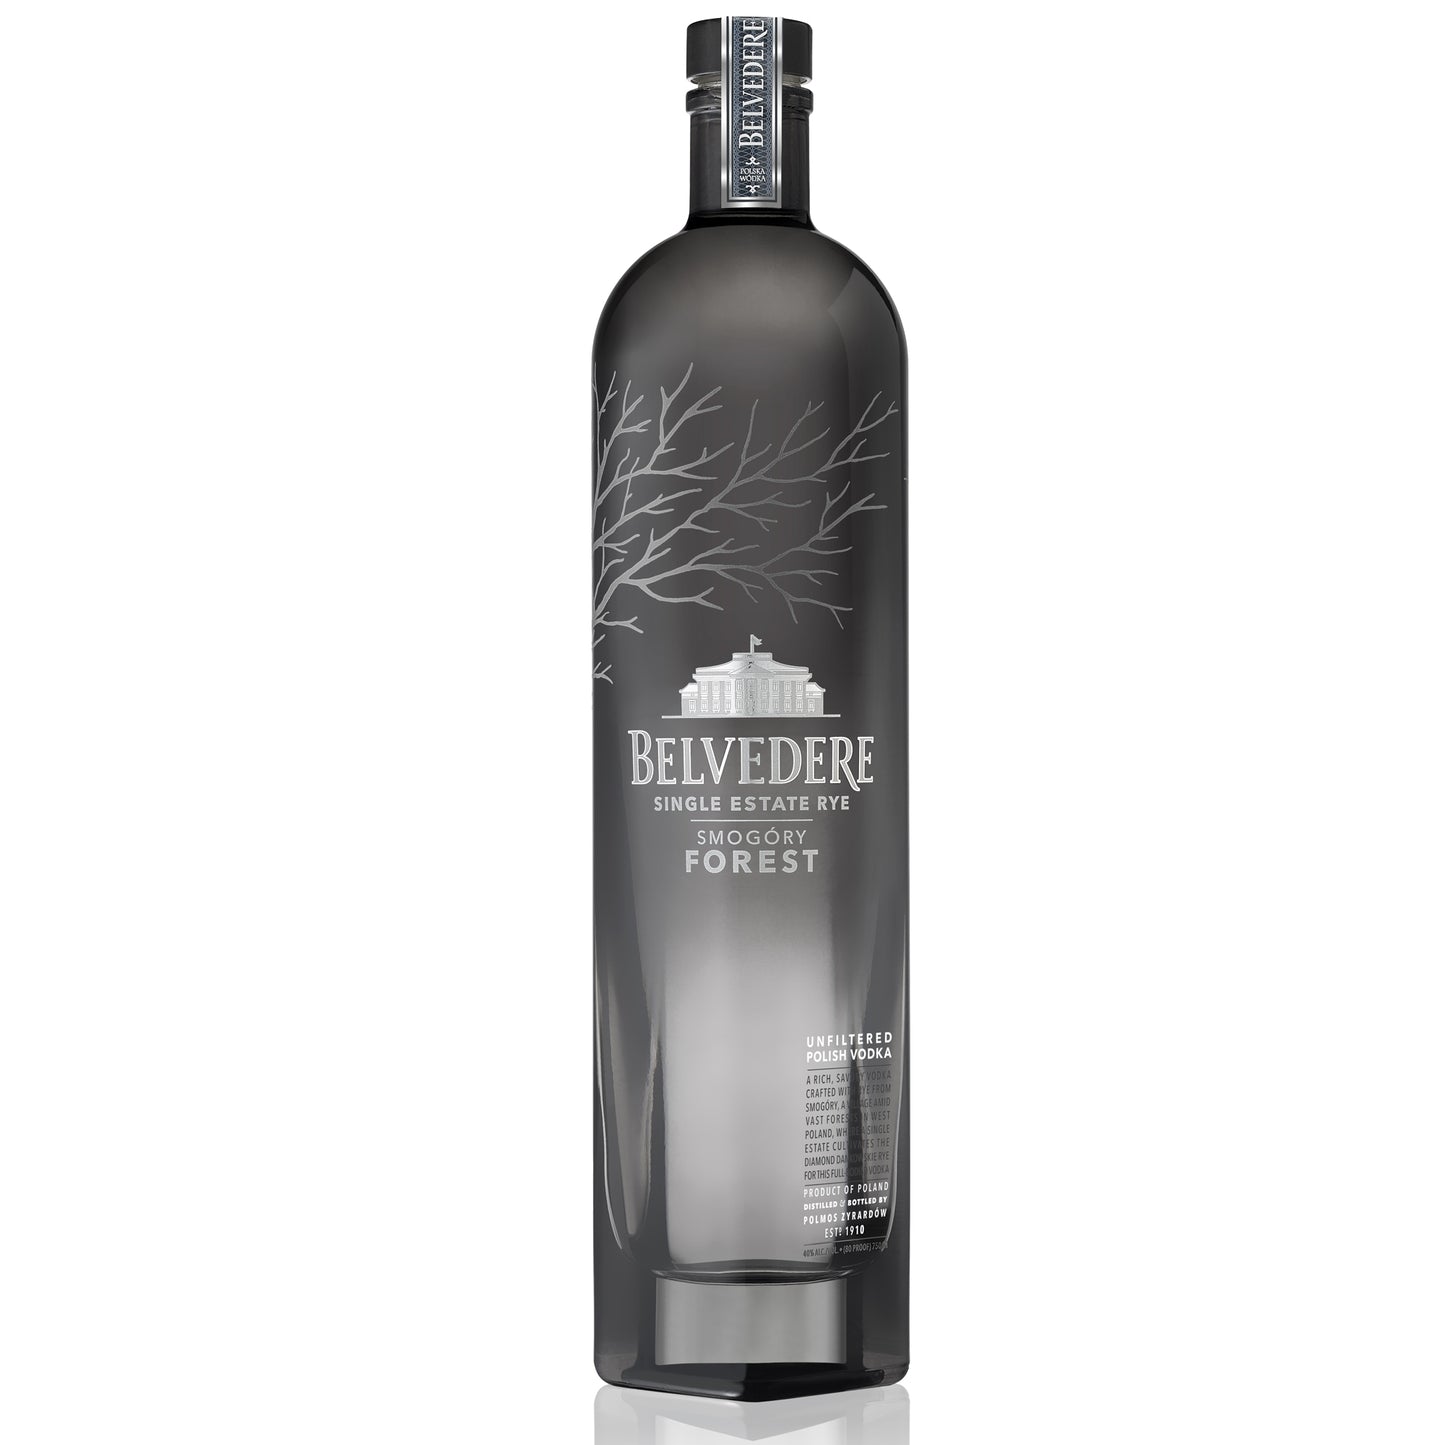 Belvedere 'Smogory Forest' Single Estate Rye Vodka